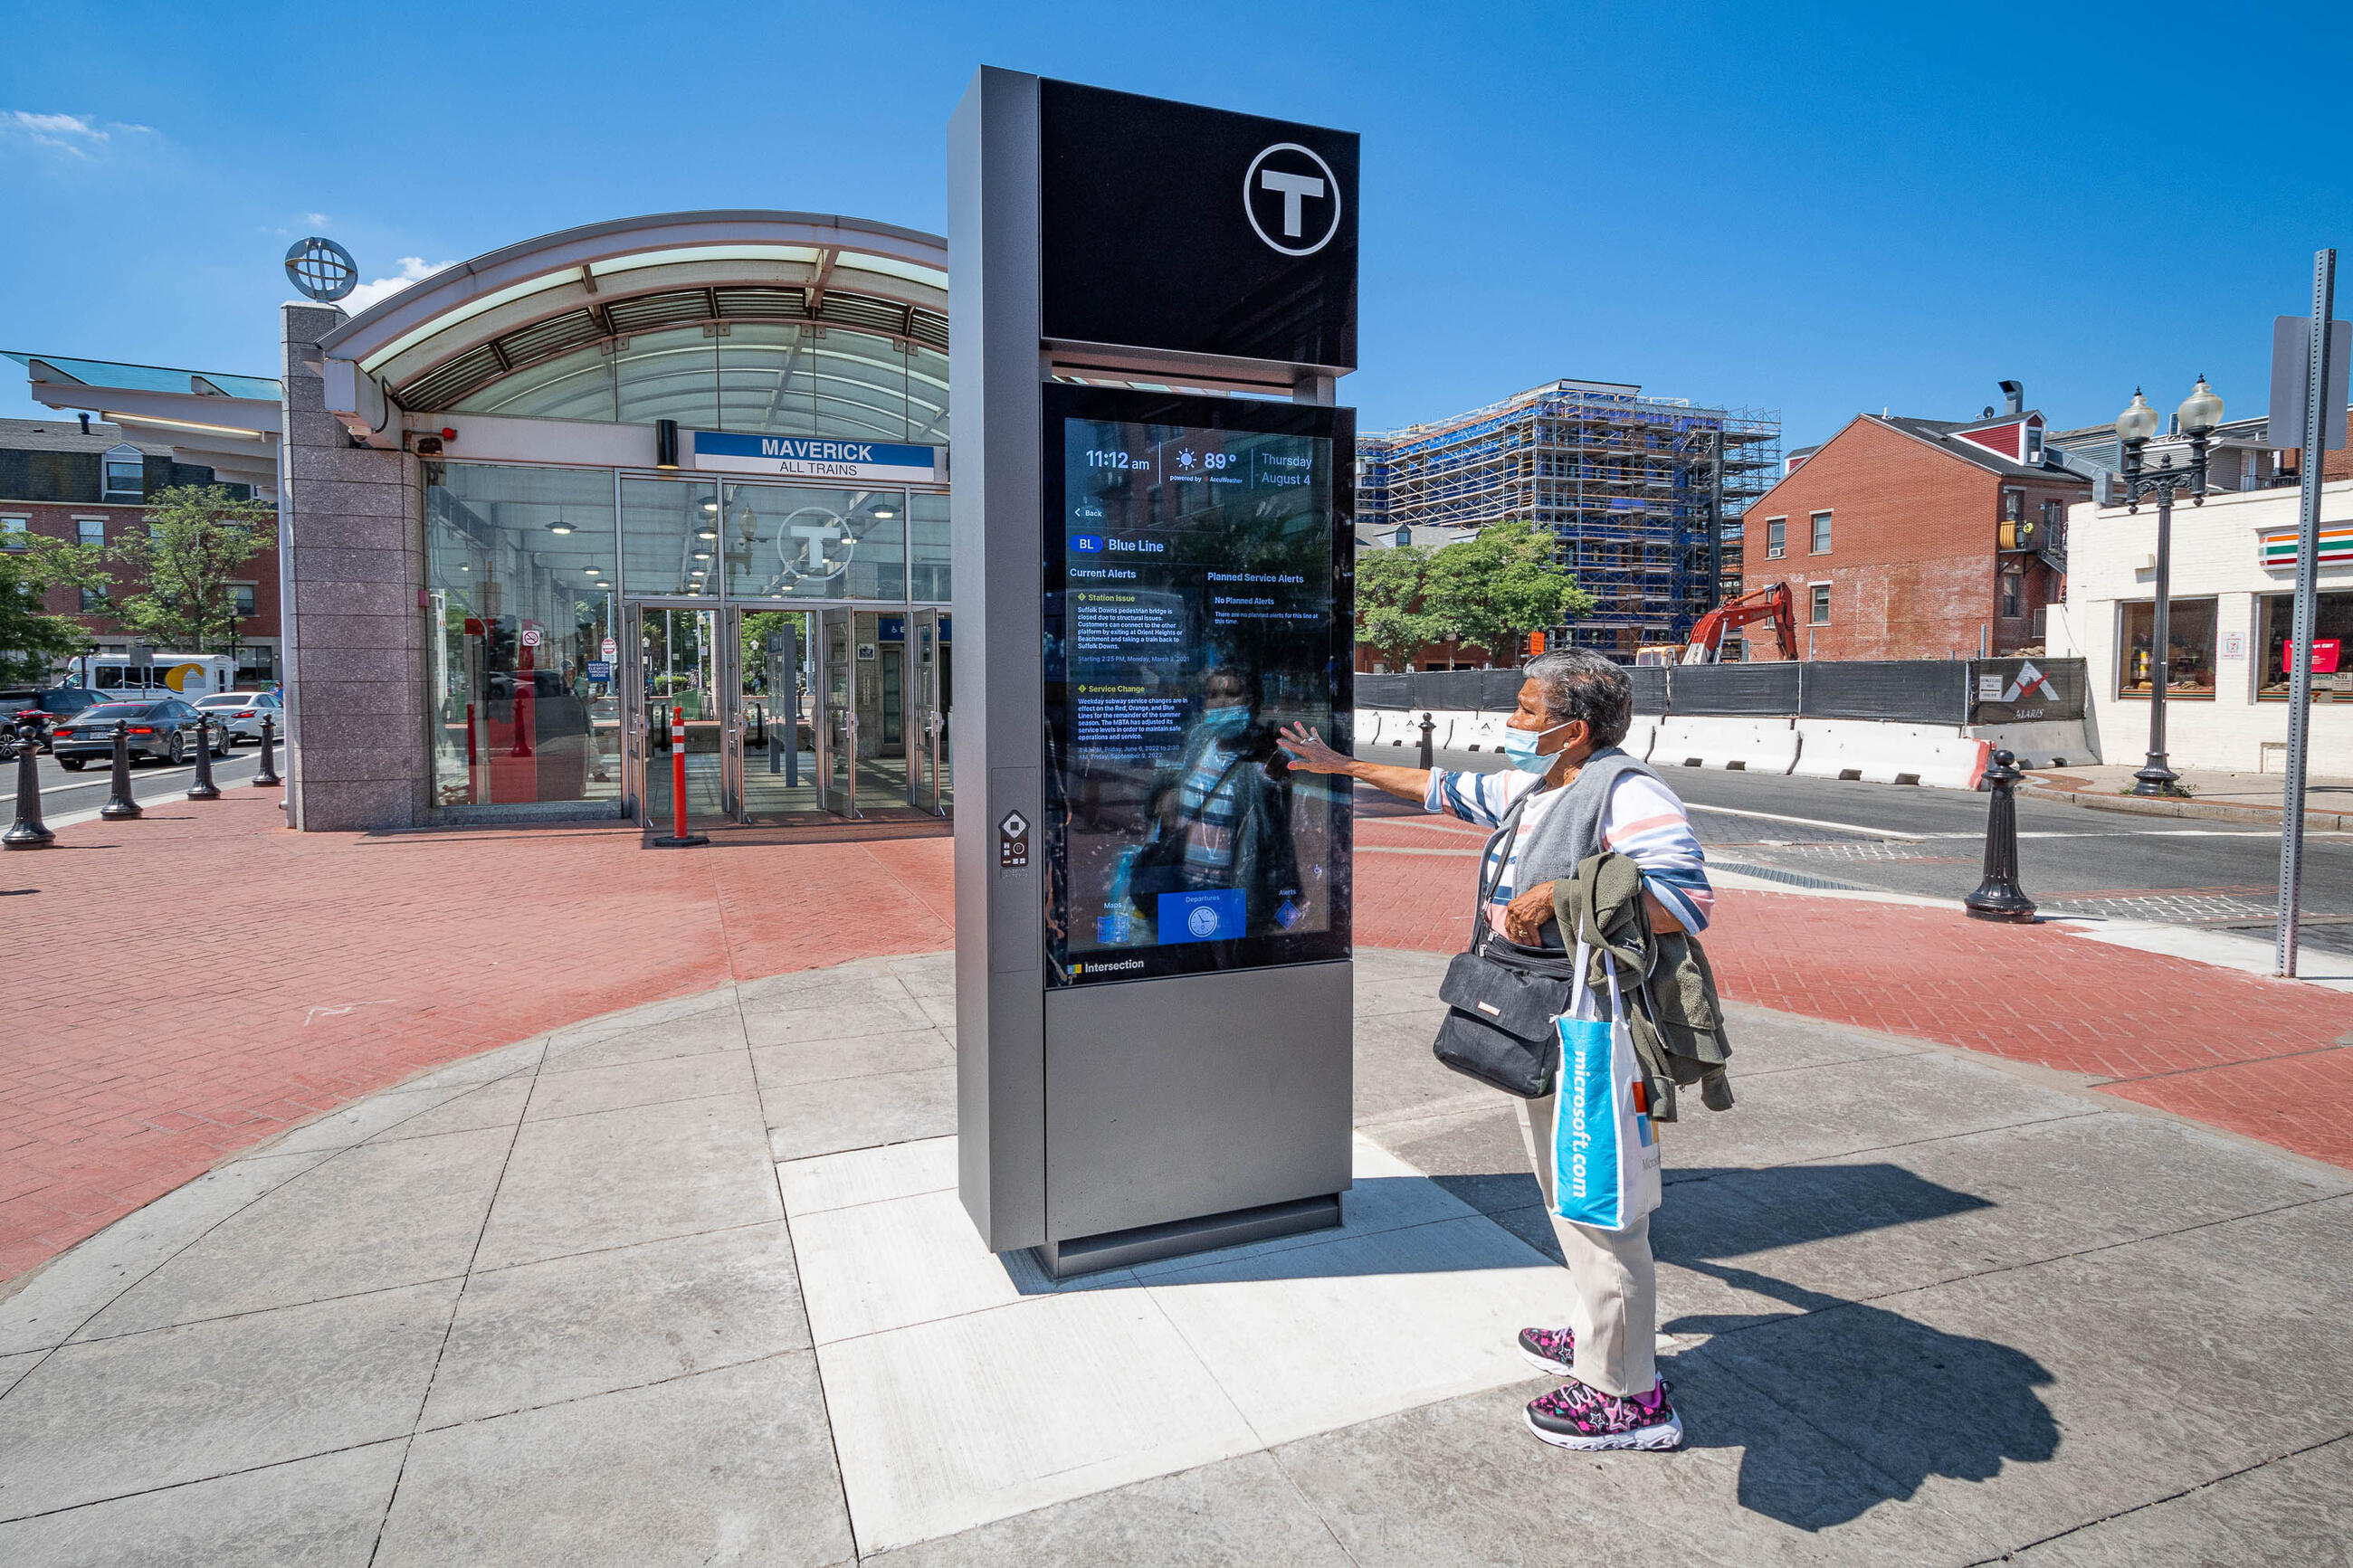 A rider looks at a digital kiosk sign at Maverick station